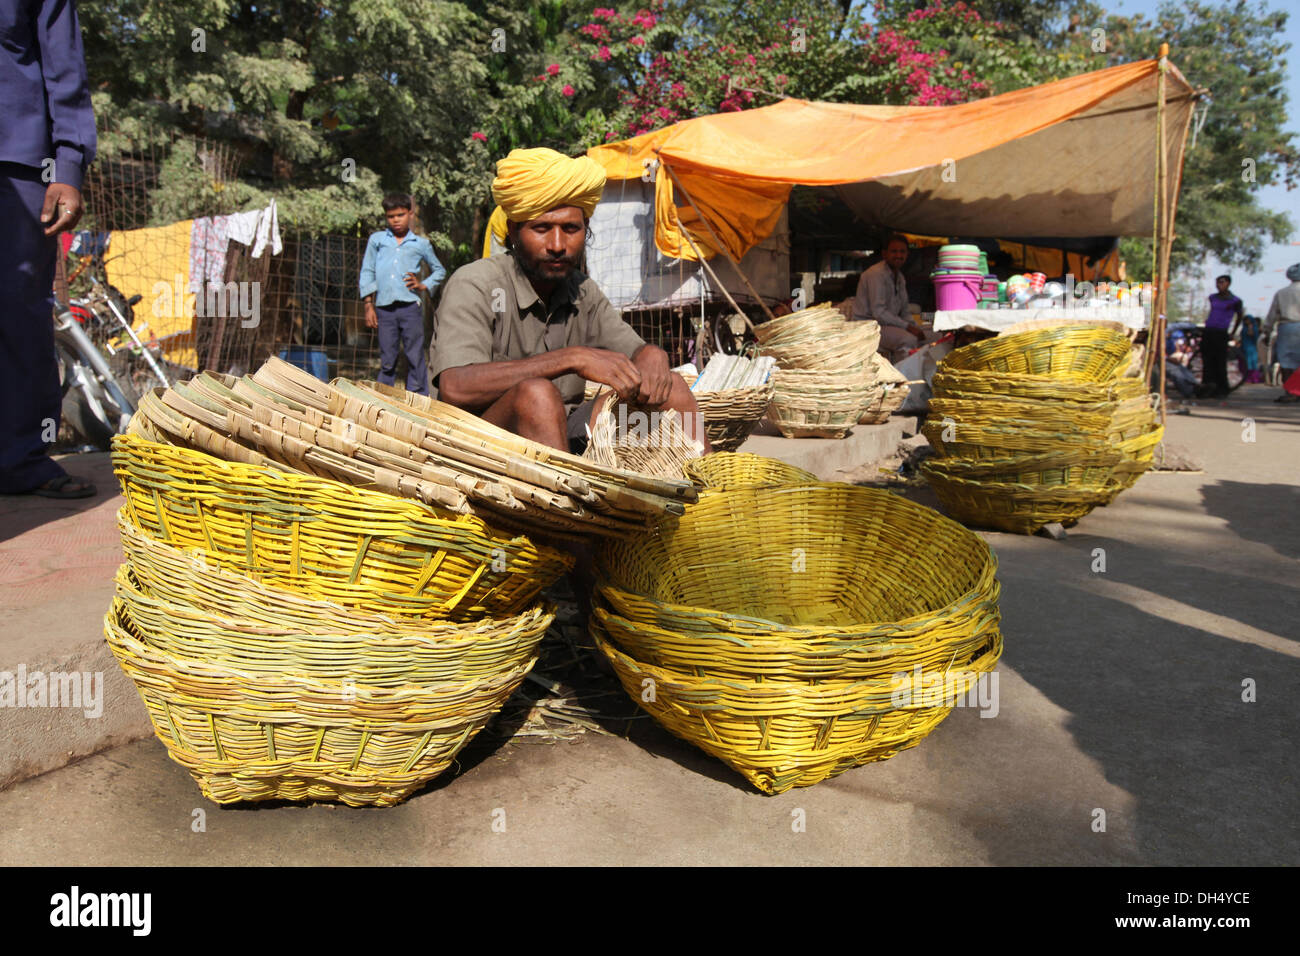 Vendor selling bambu baskets in a market, Jhabua, Madhya Pradesh, India Stock Photo